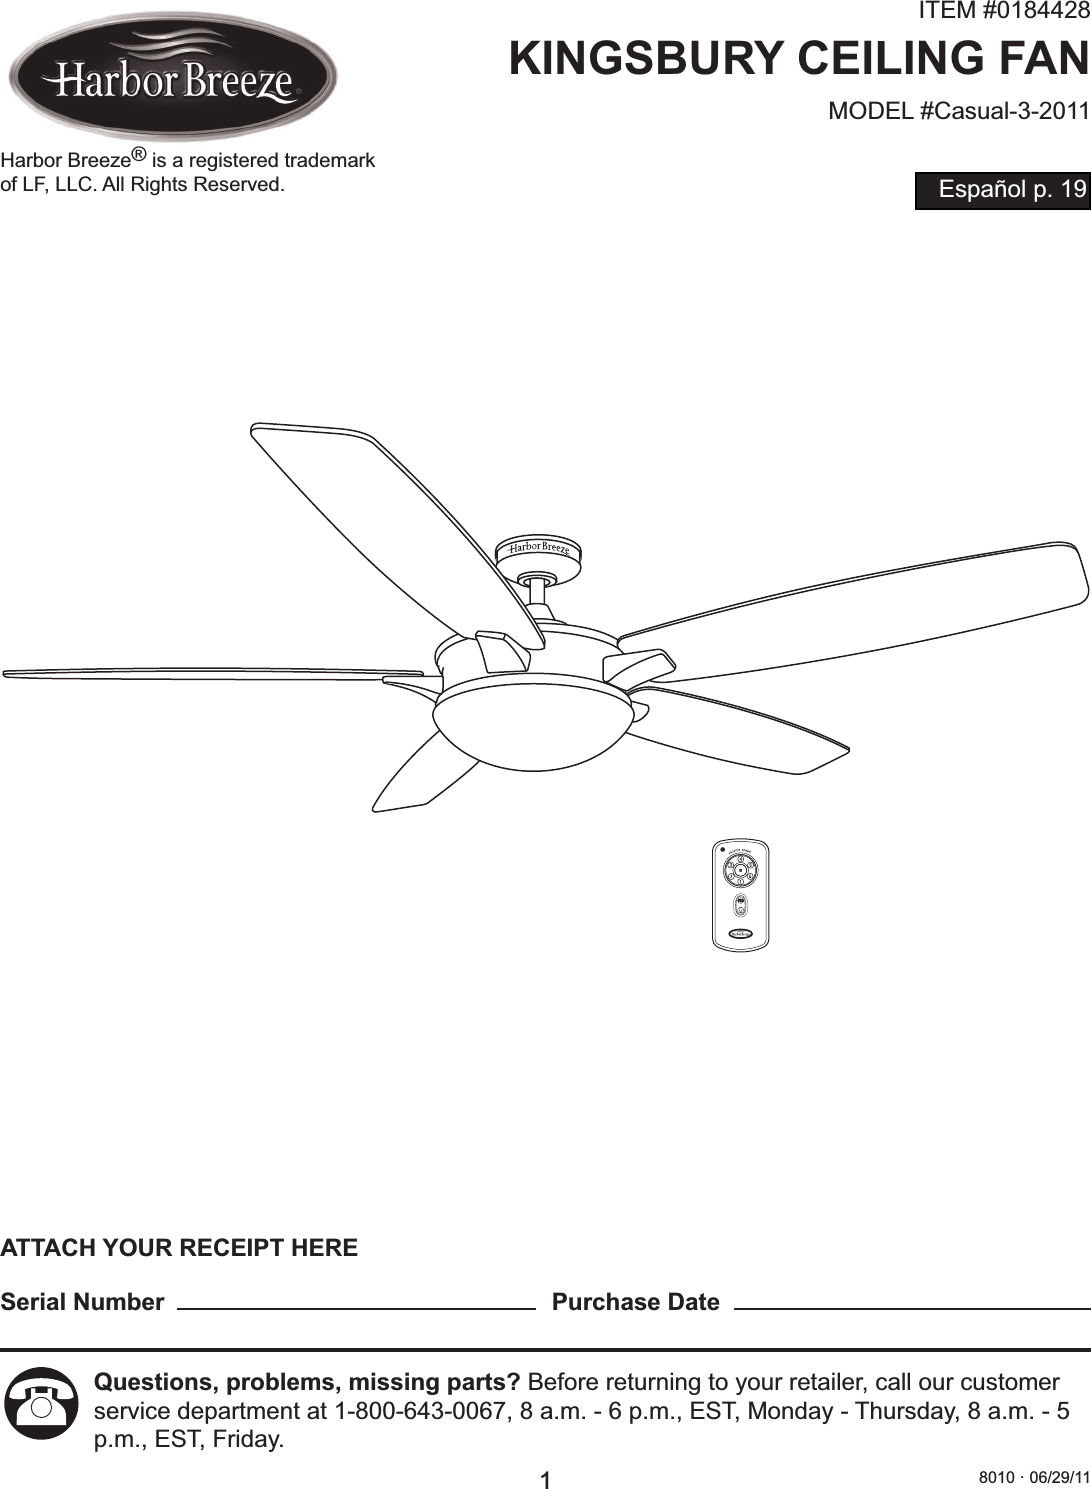 Dcm70 5b 2l Ceiling Suspended Fan